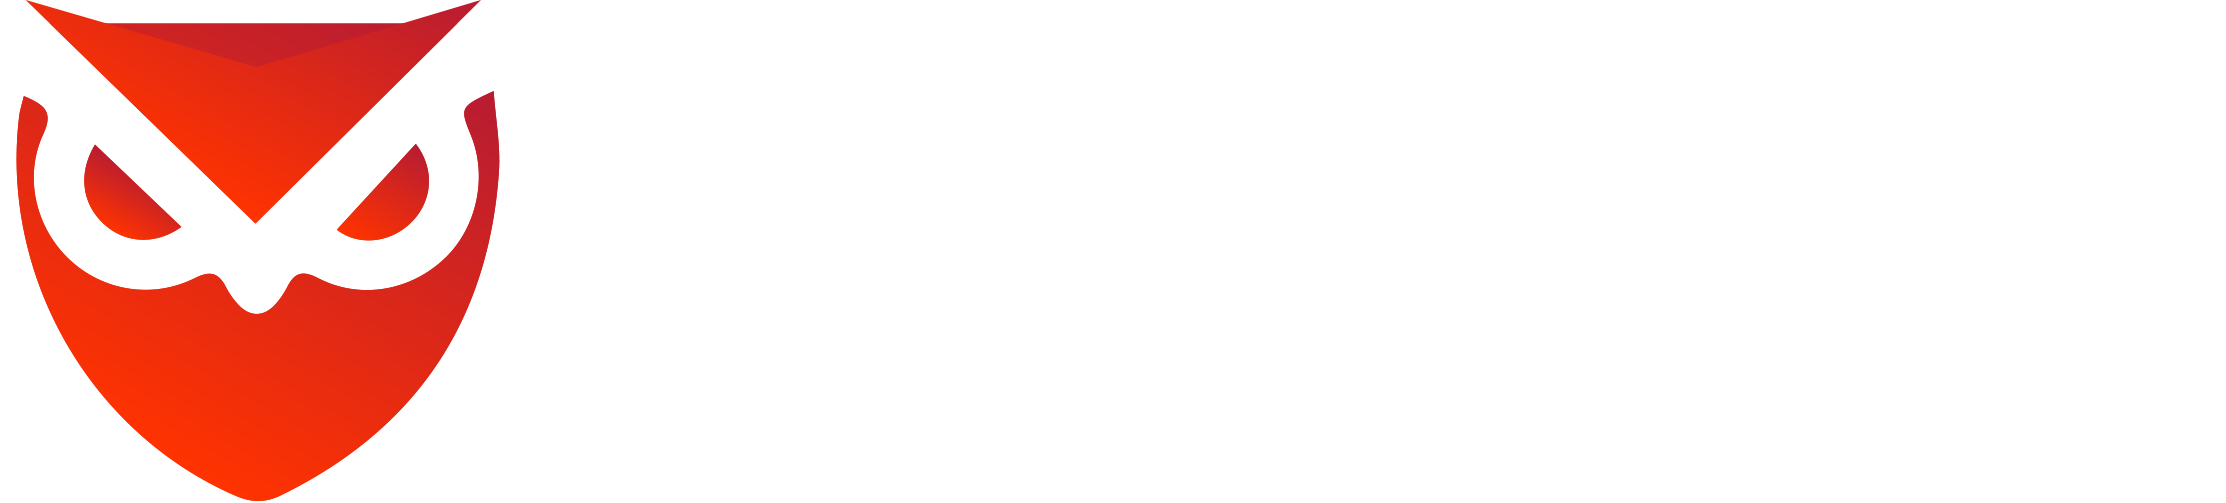 Redinext Logo